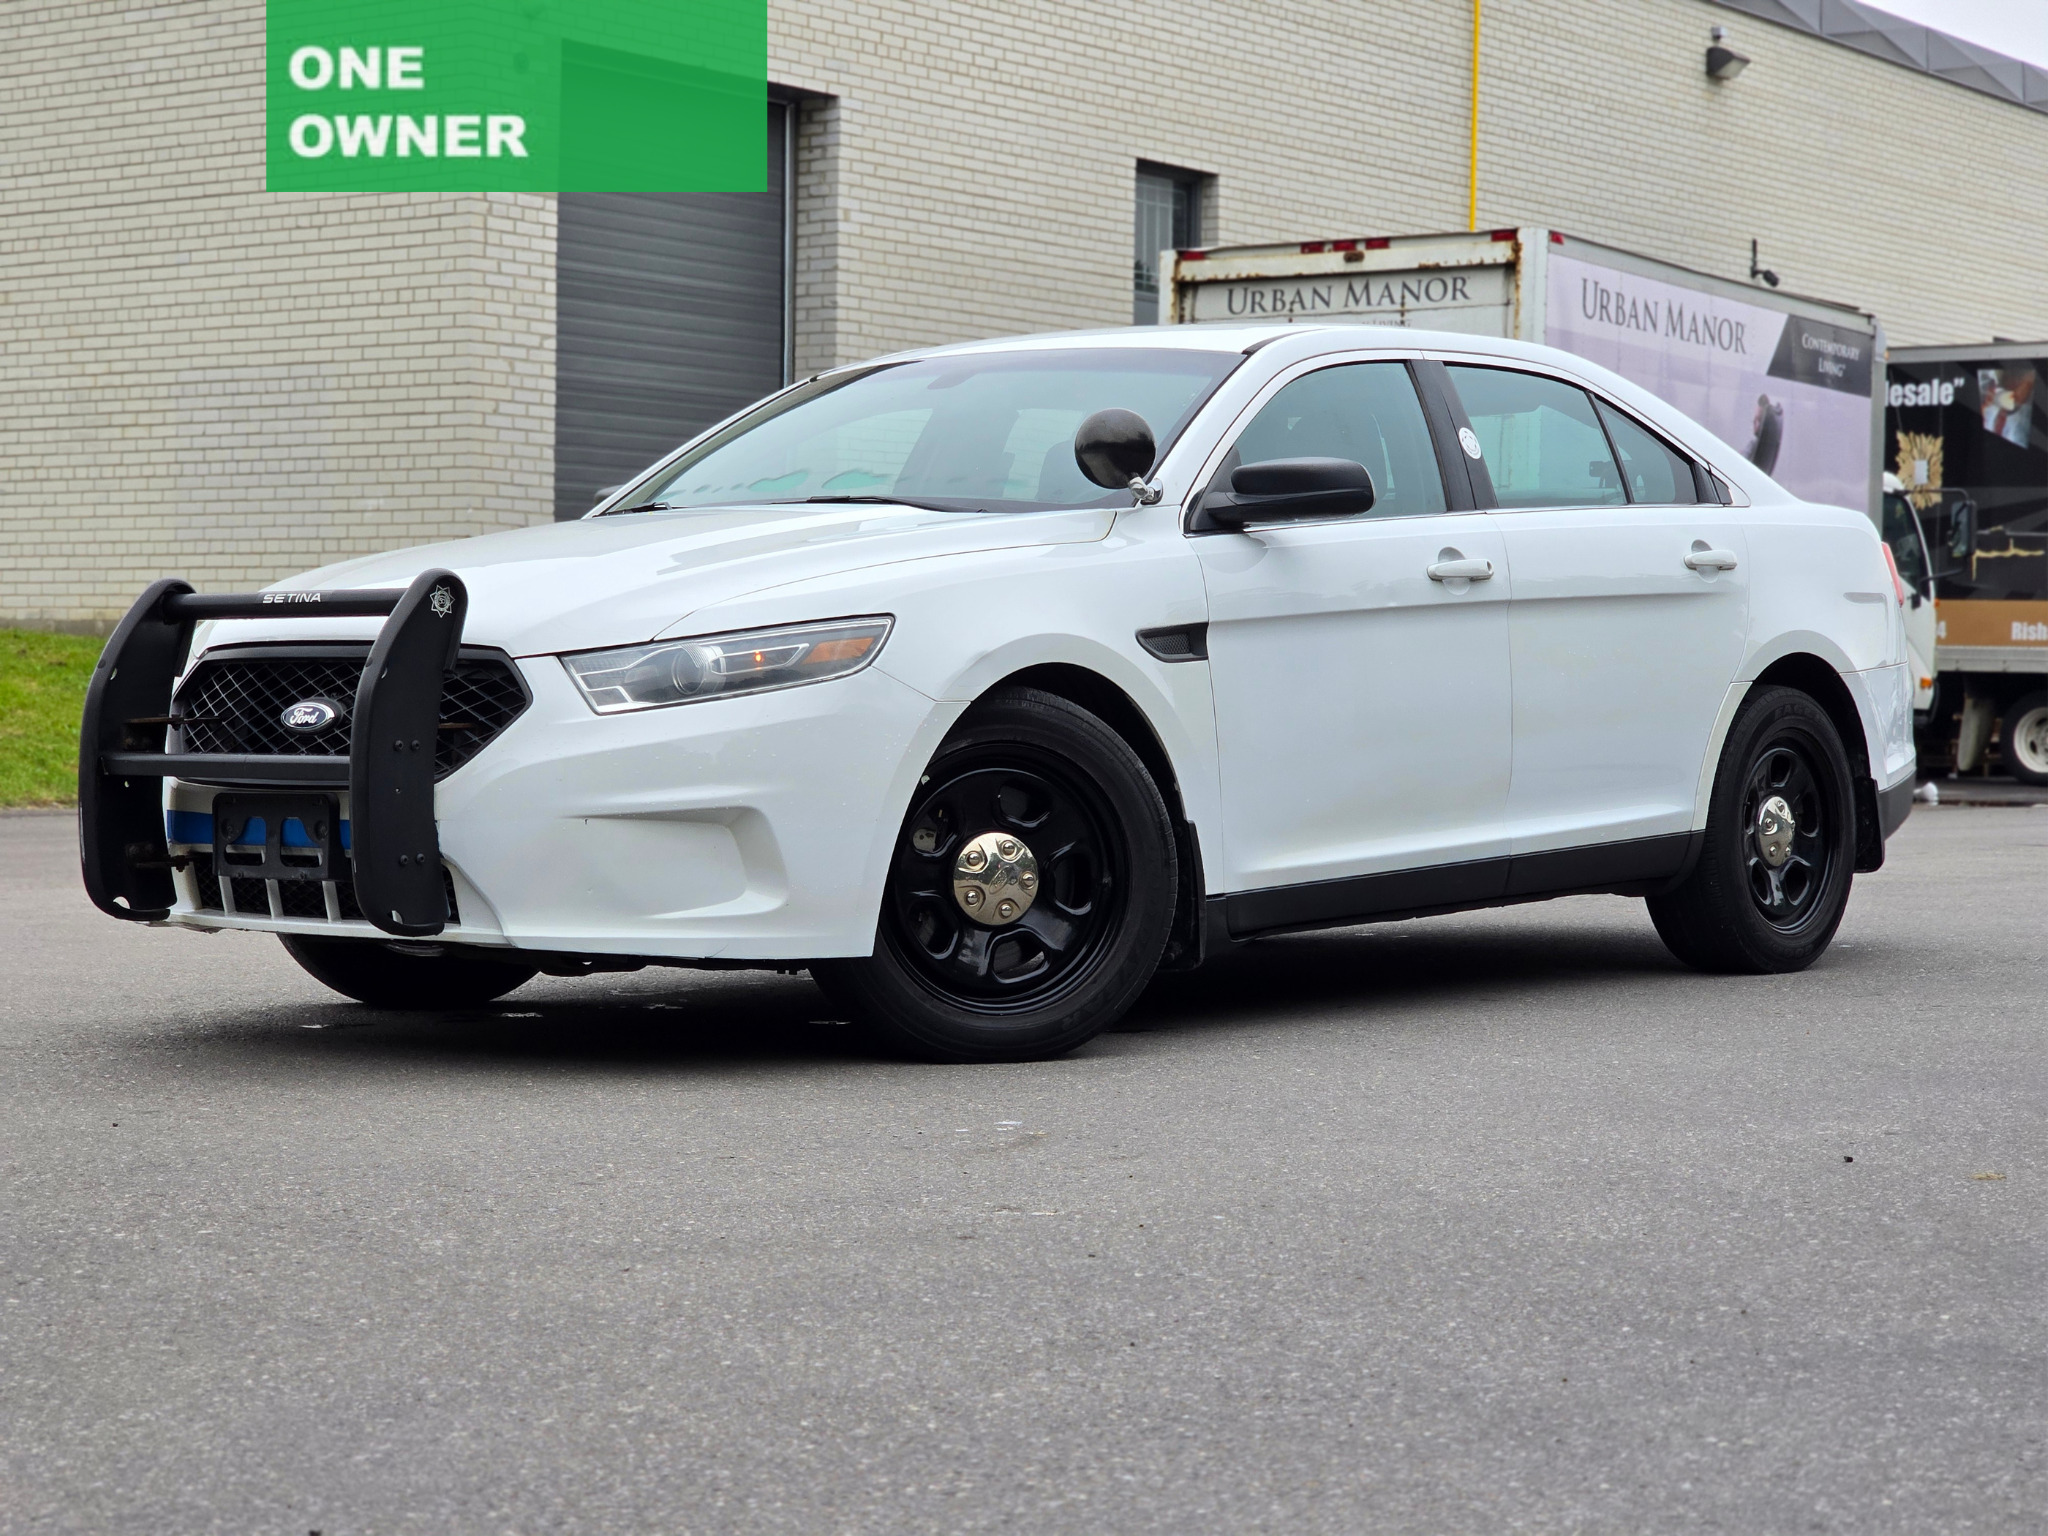 2014 Ford Police Interceptor Sedan -ONE Owner *Amber Lighting* Great for Security Use